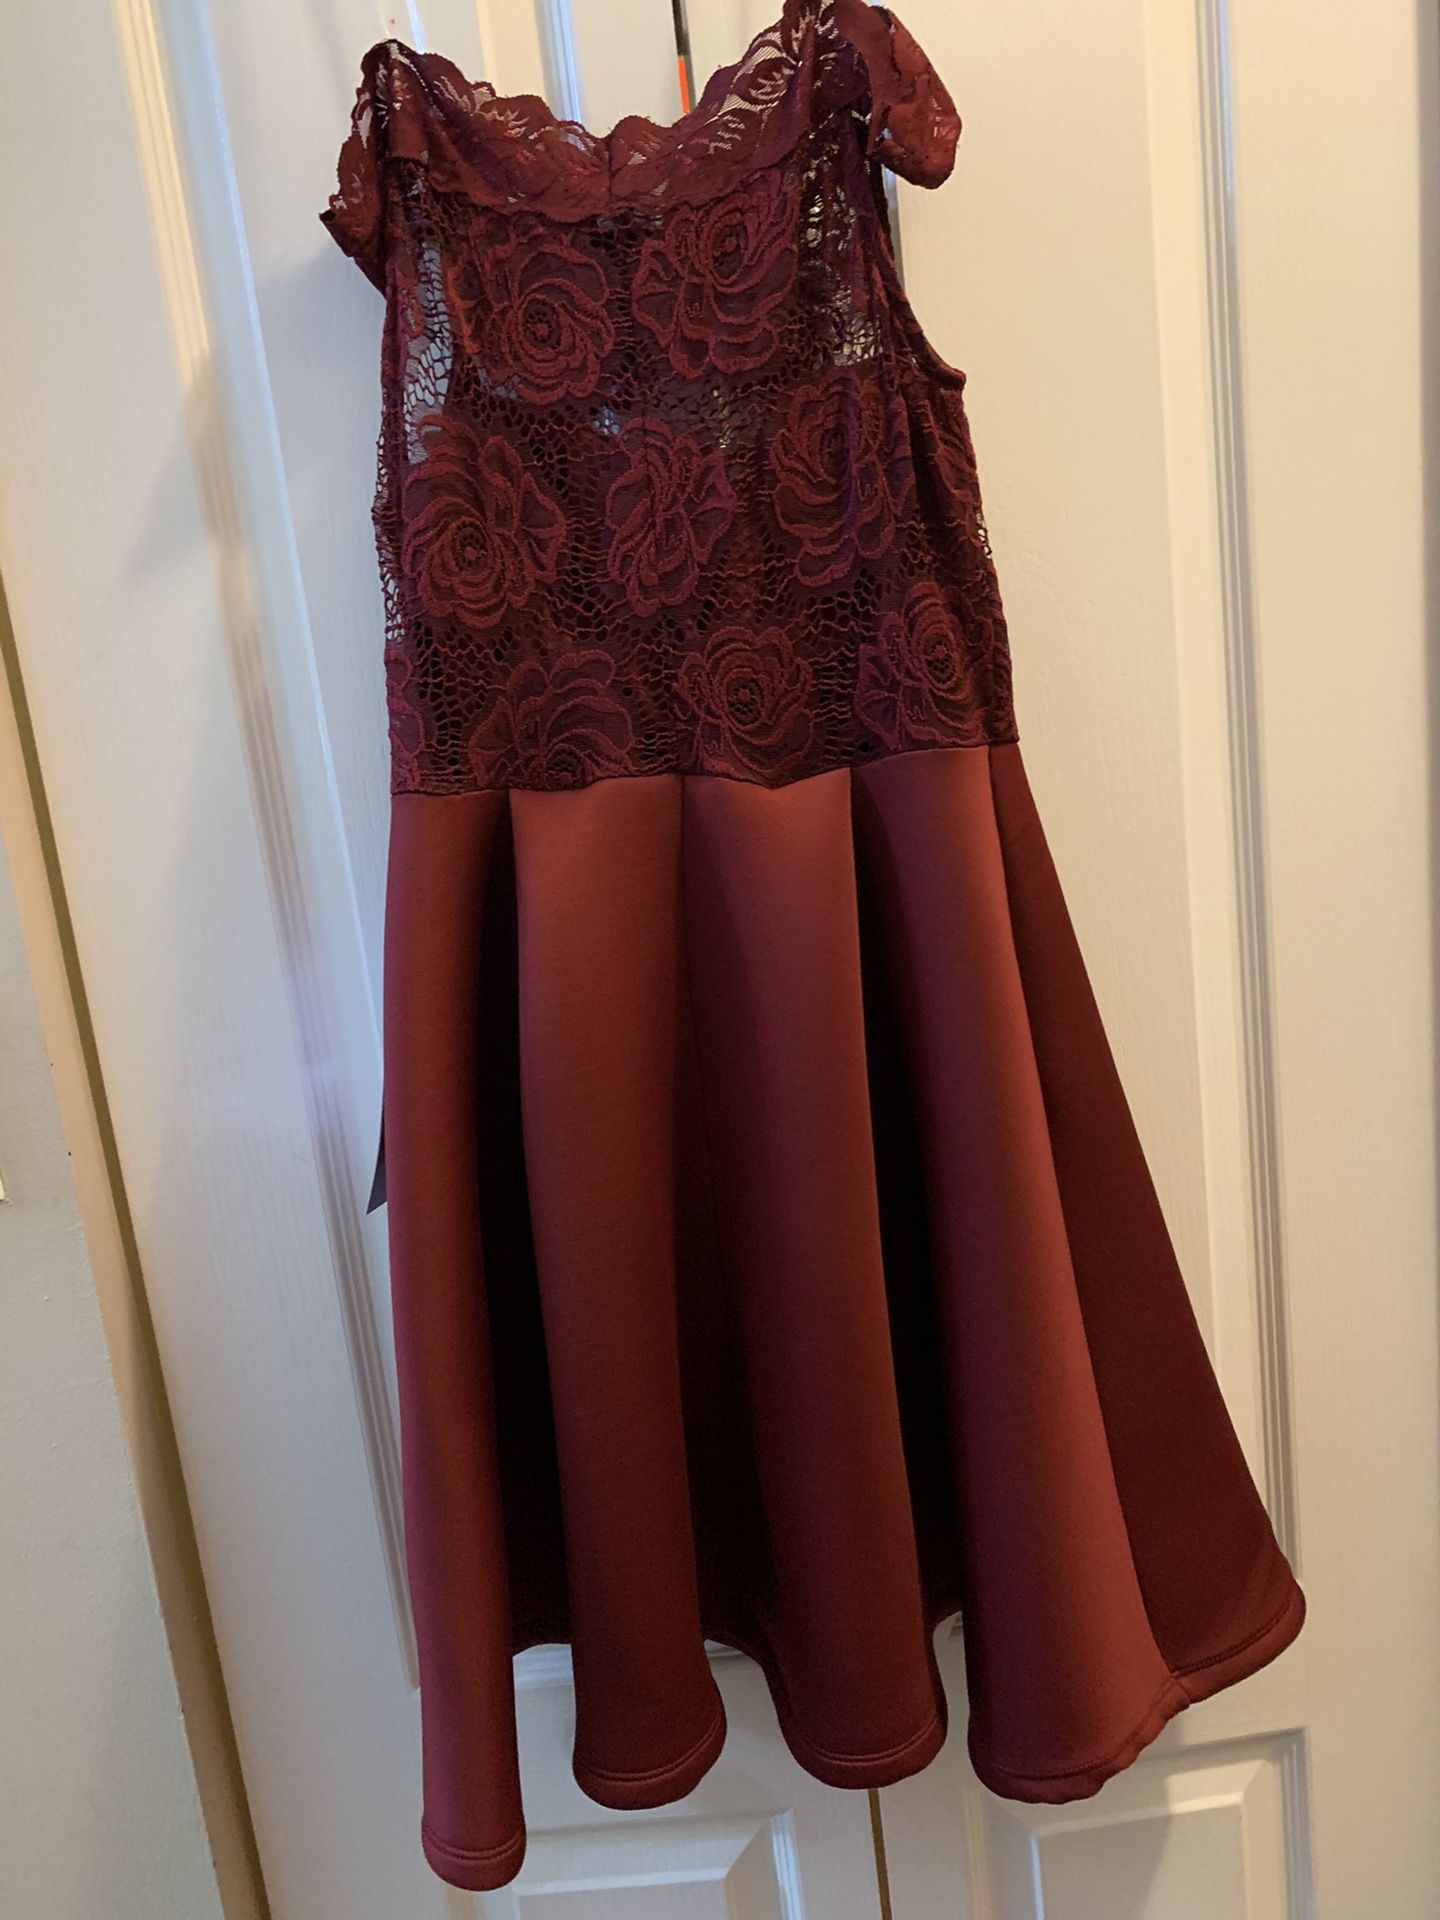 New Formal/Prom dress Size M